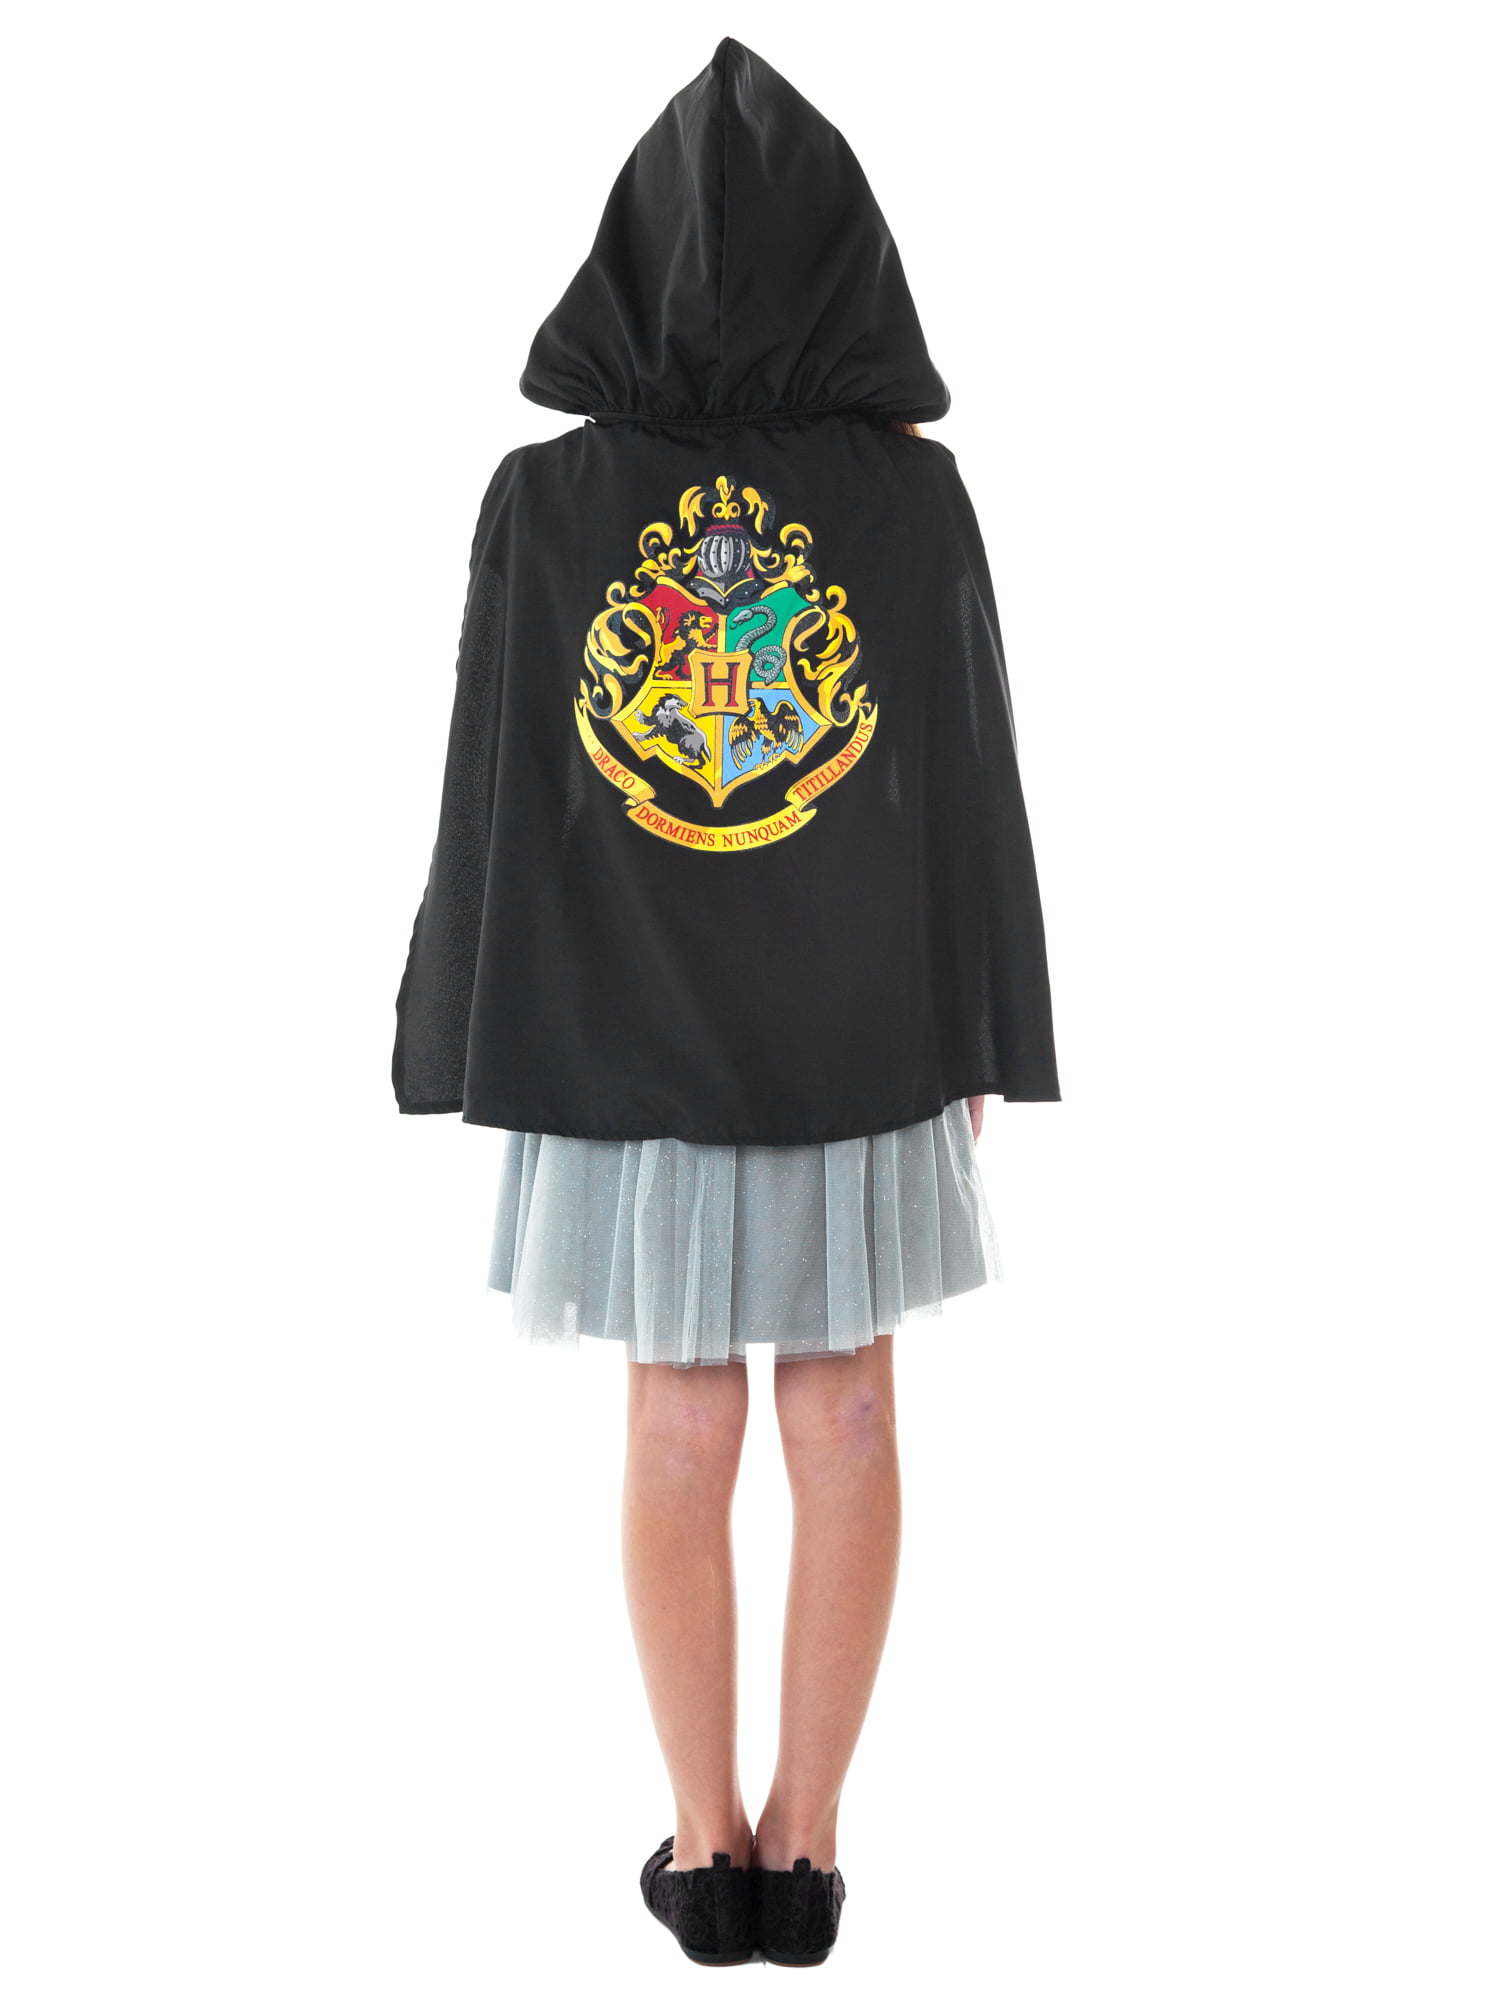 2PCS Harried Harry Potter Cloak Hermione Granger Costume,S 